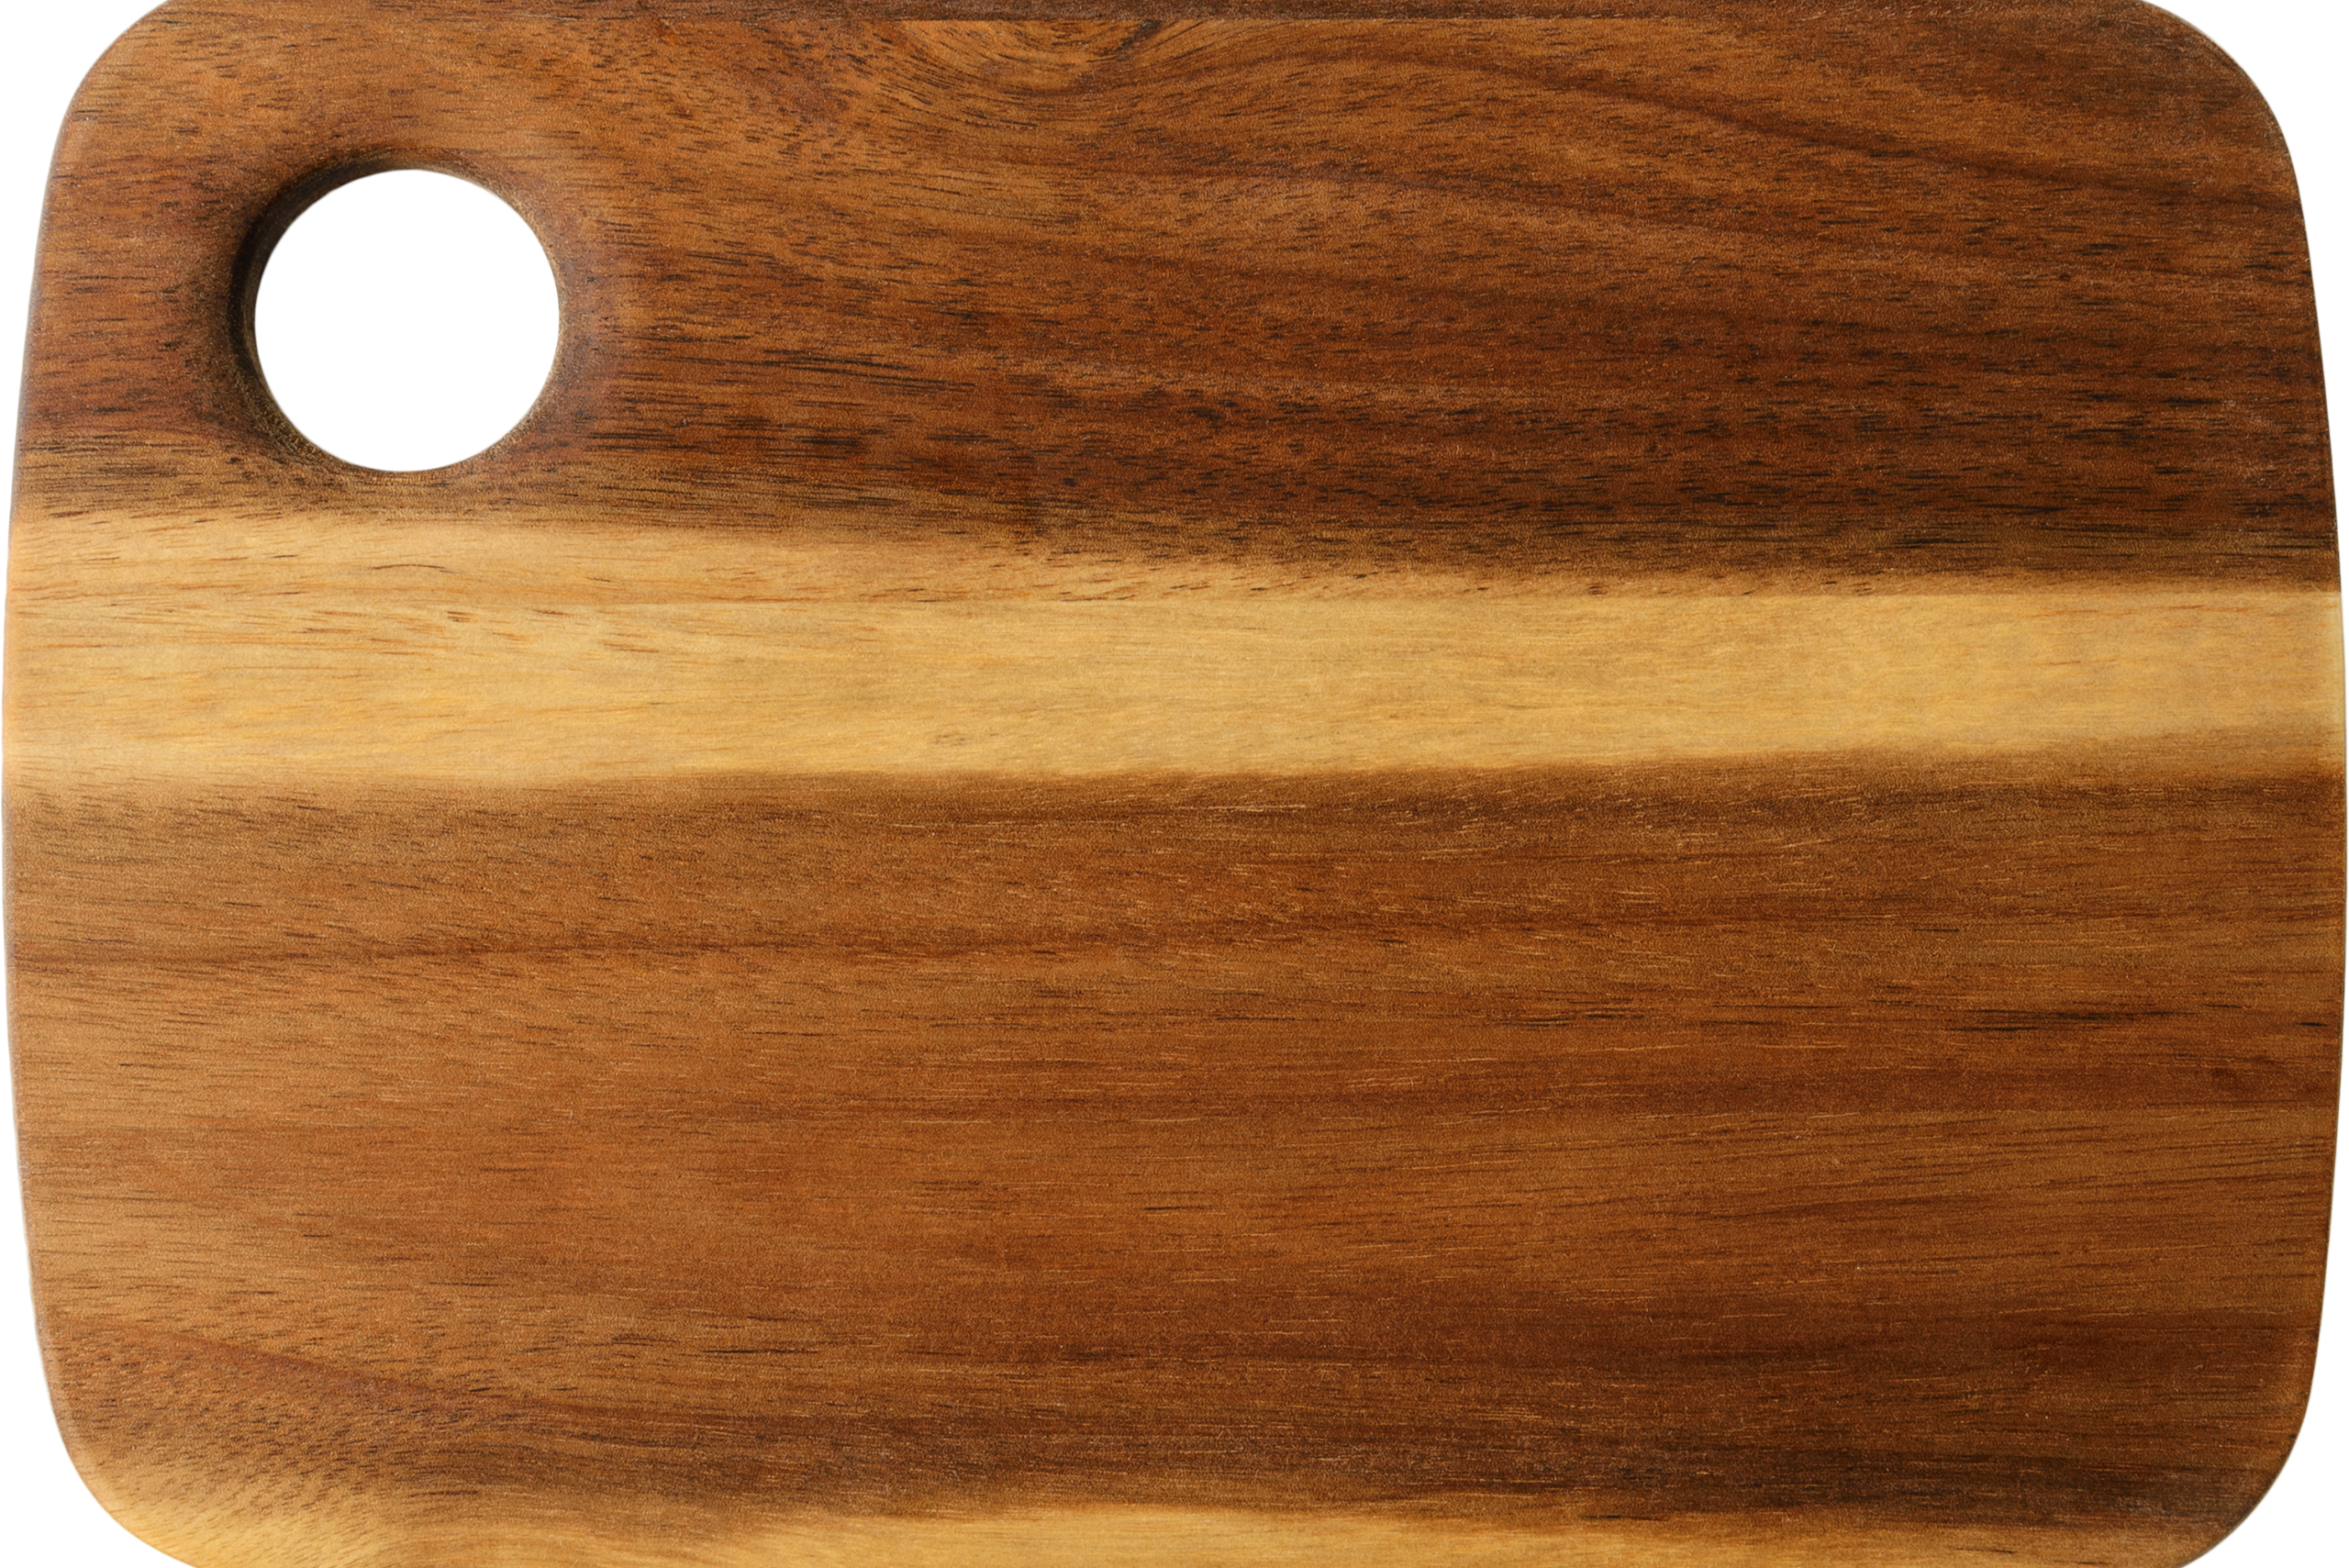 Cutting board made of acacia wood.